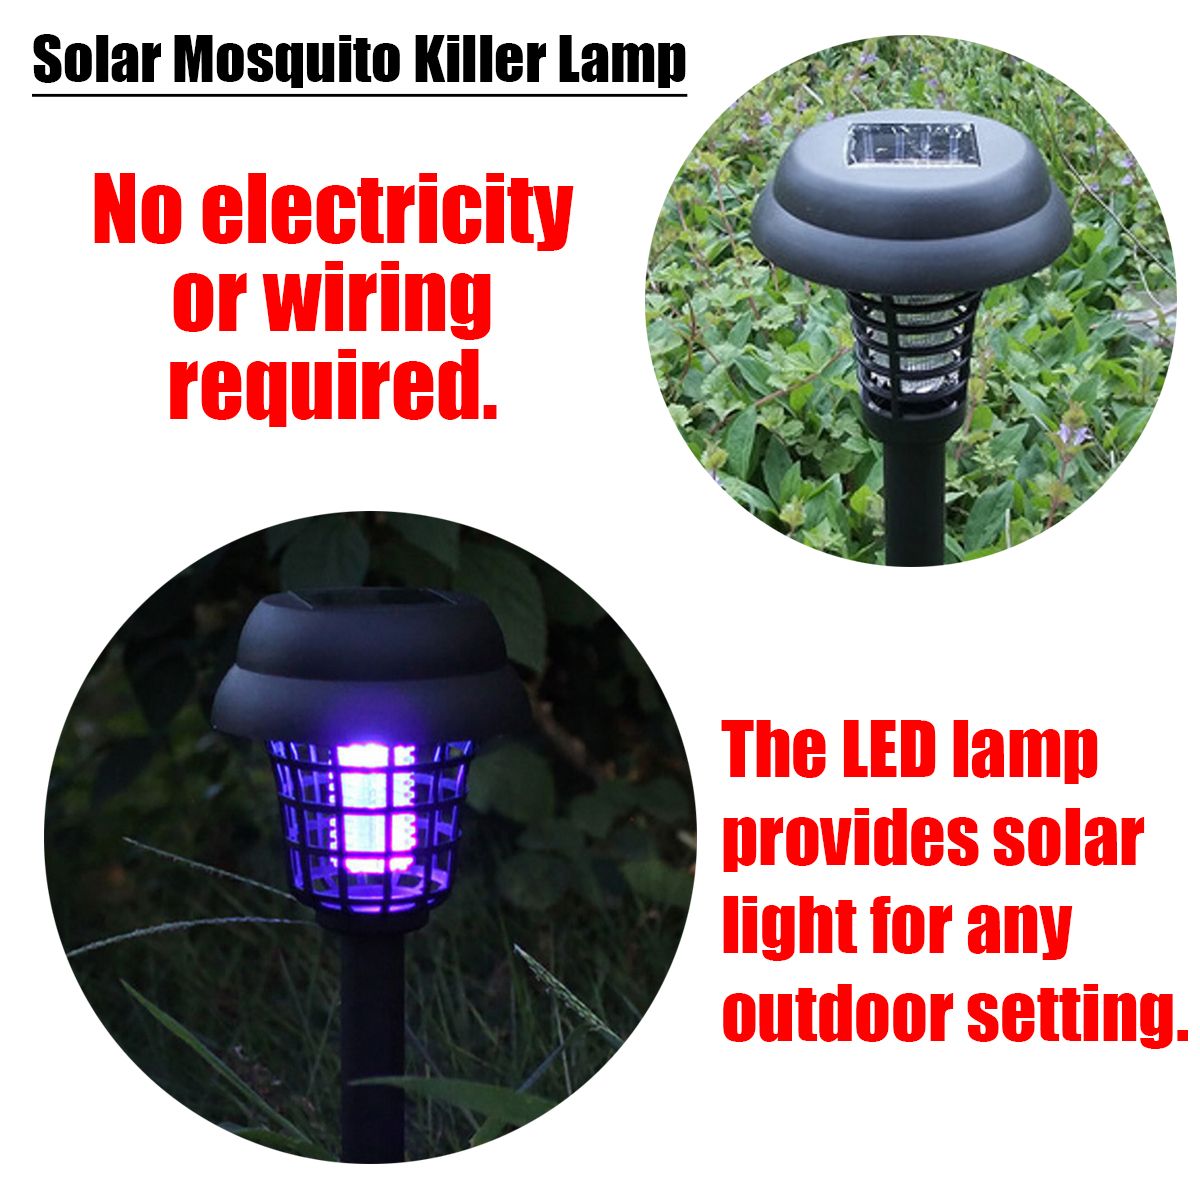 LED-Solar-Powered-Mosquito-Killer-Light-Outdoor-Courtyard-Rainproof-Garden-Home-Lawn-Lamp-1723022